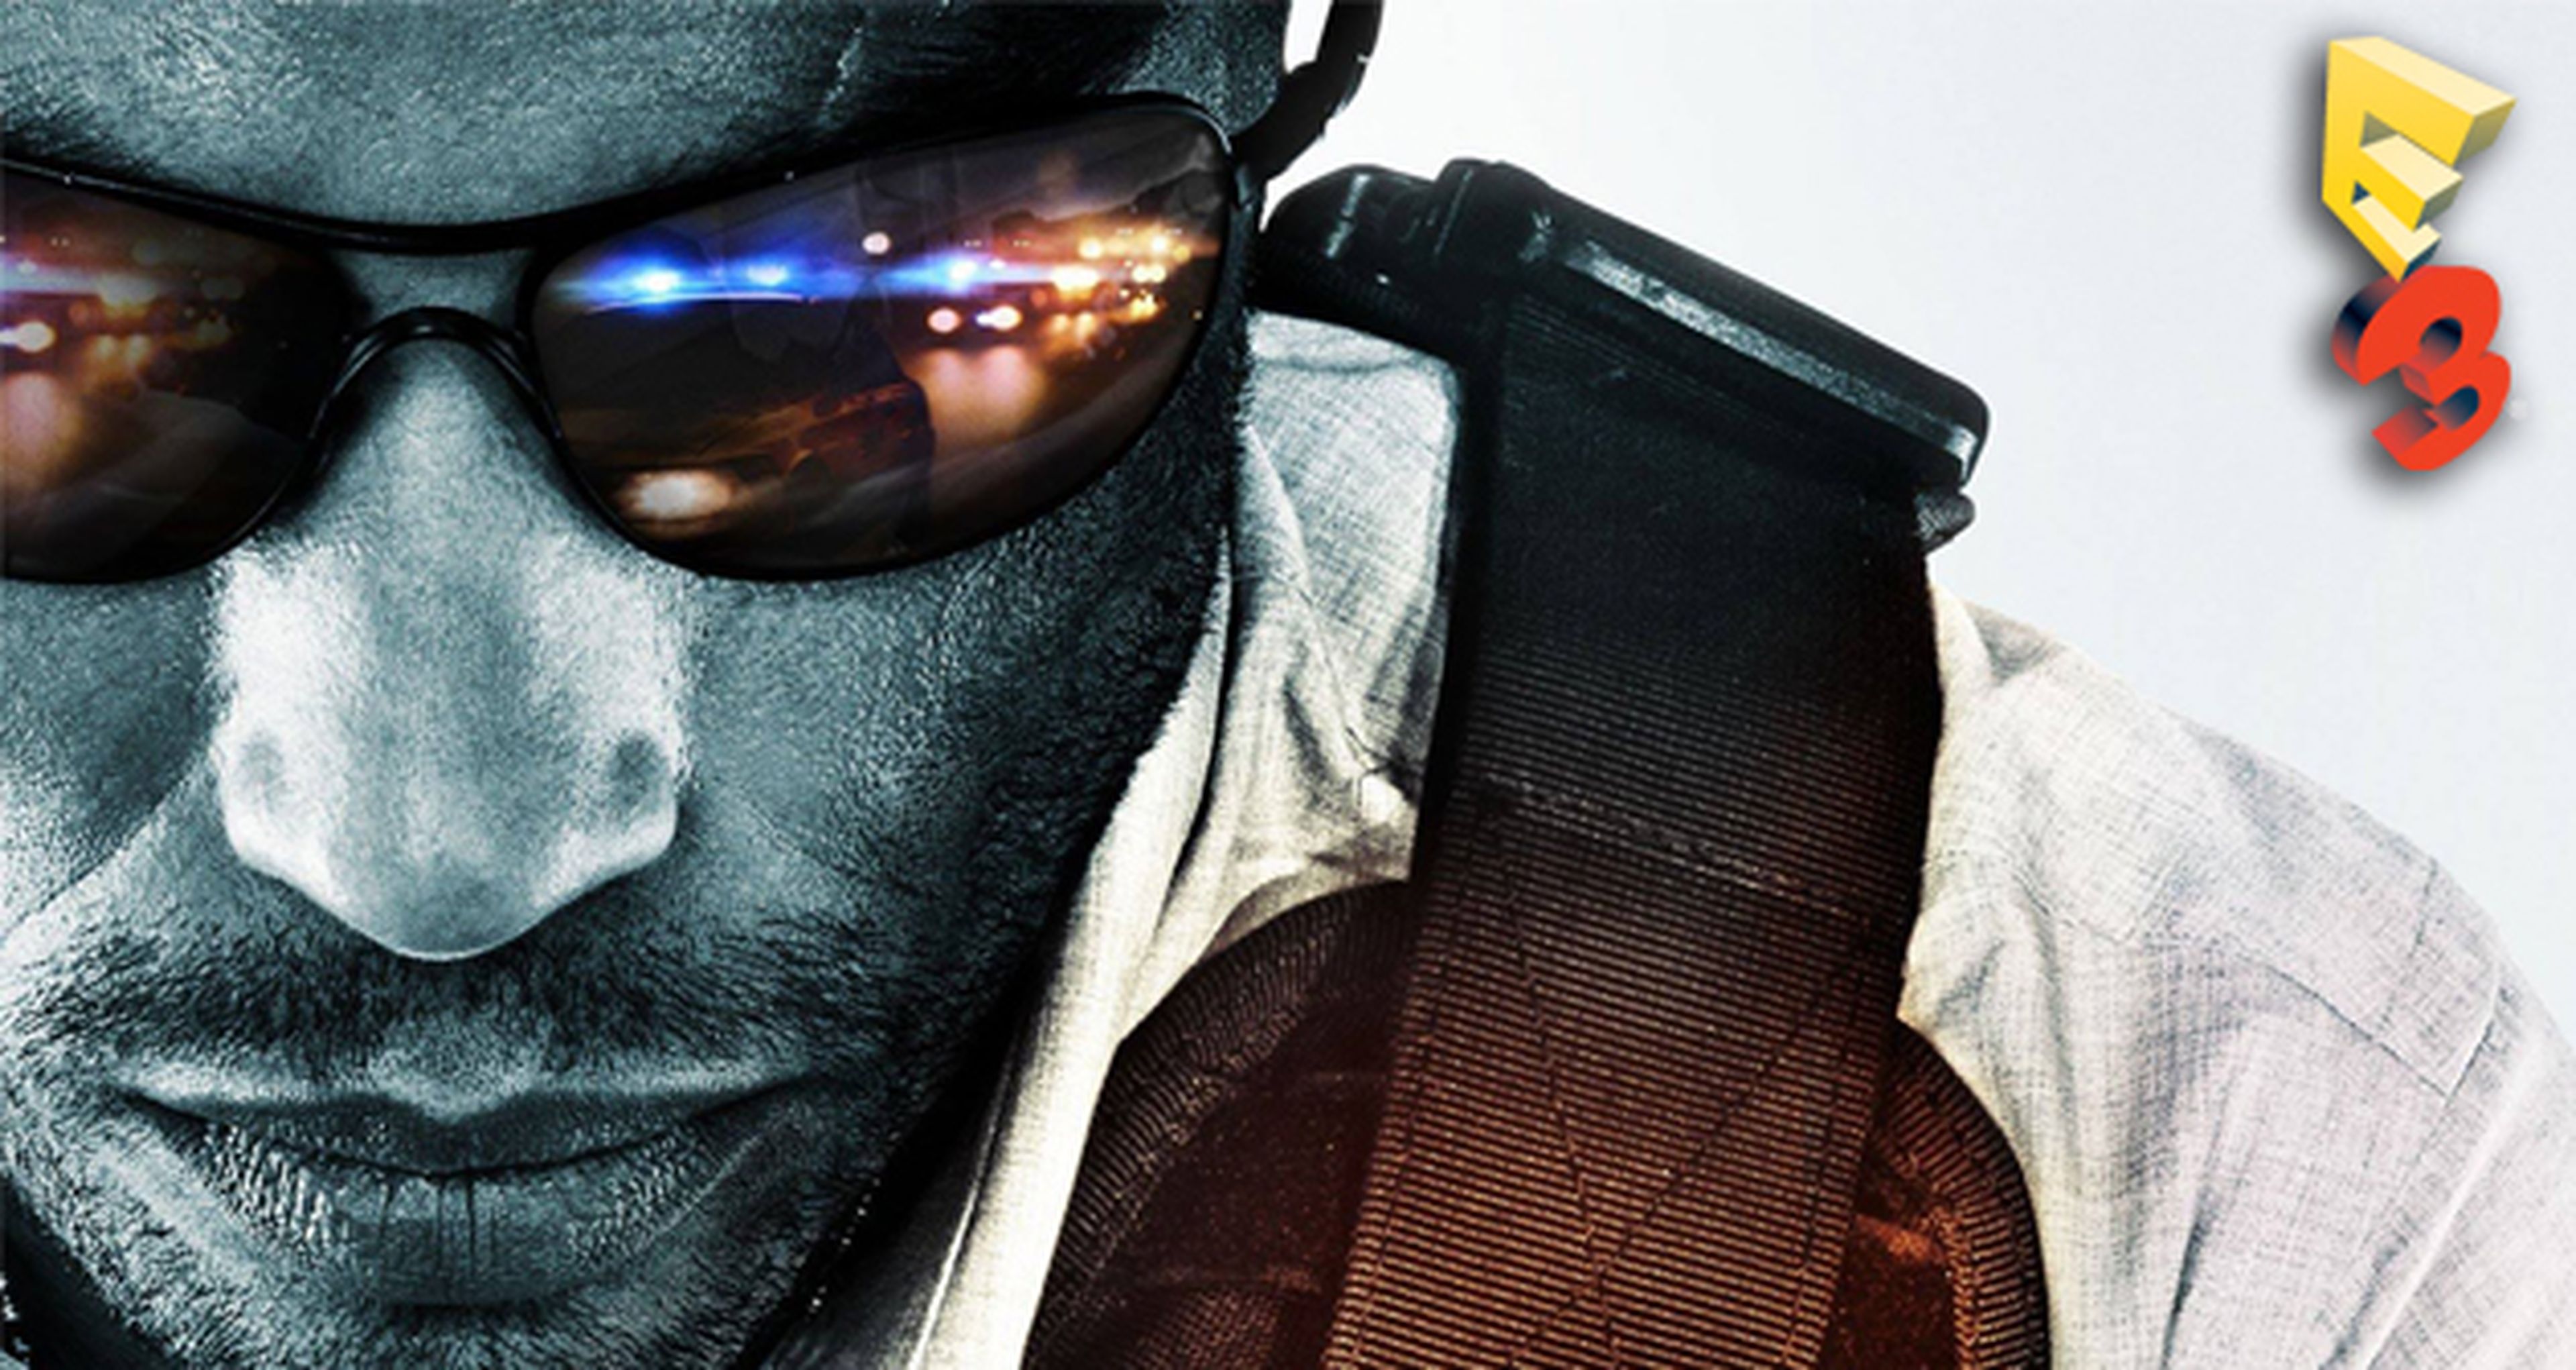 E3 2014: Probamos Battlefield Hardline